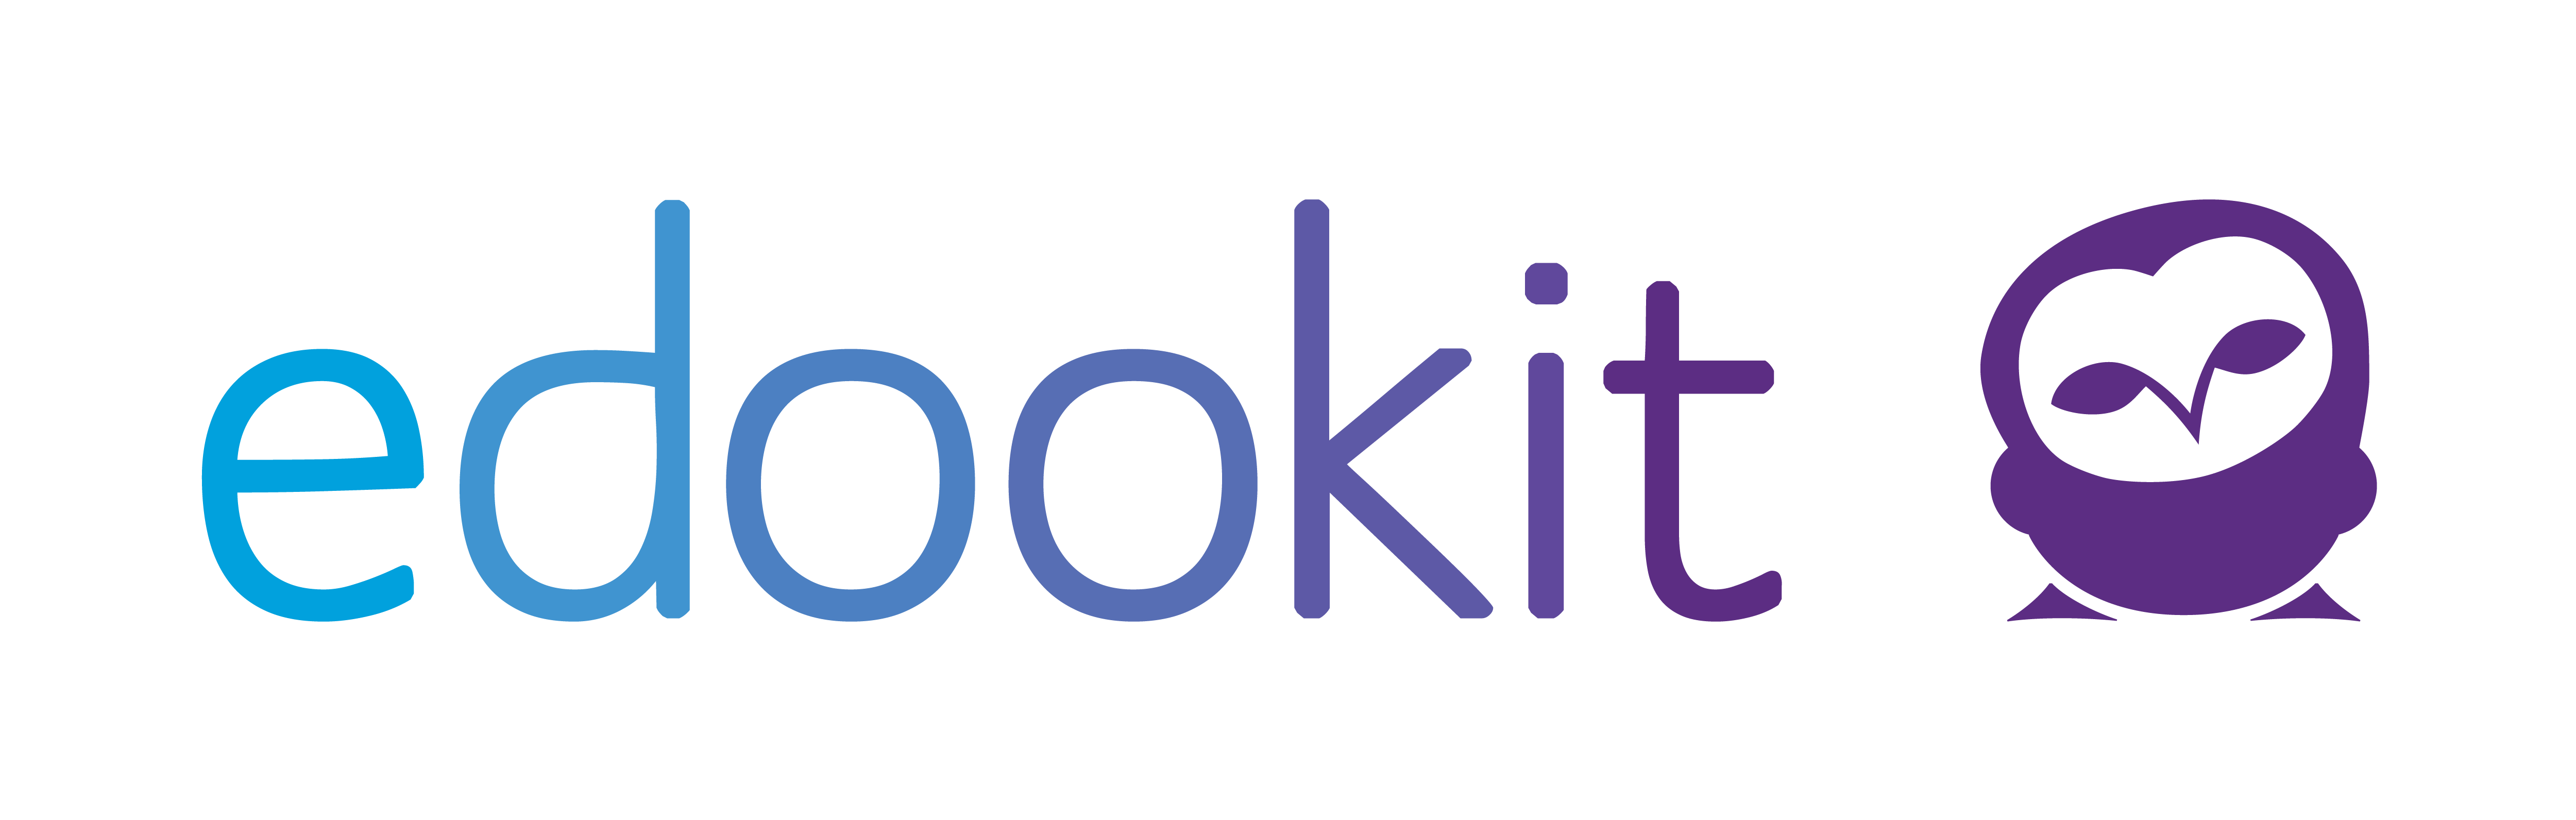 edookit logo